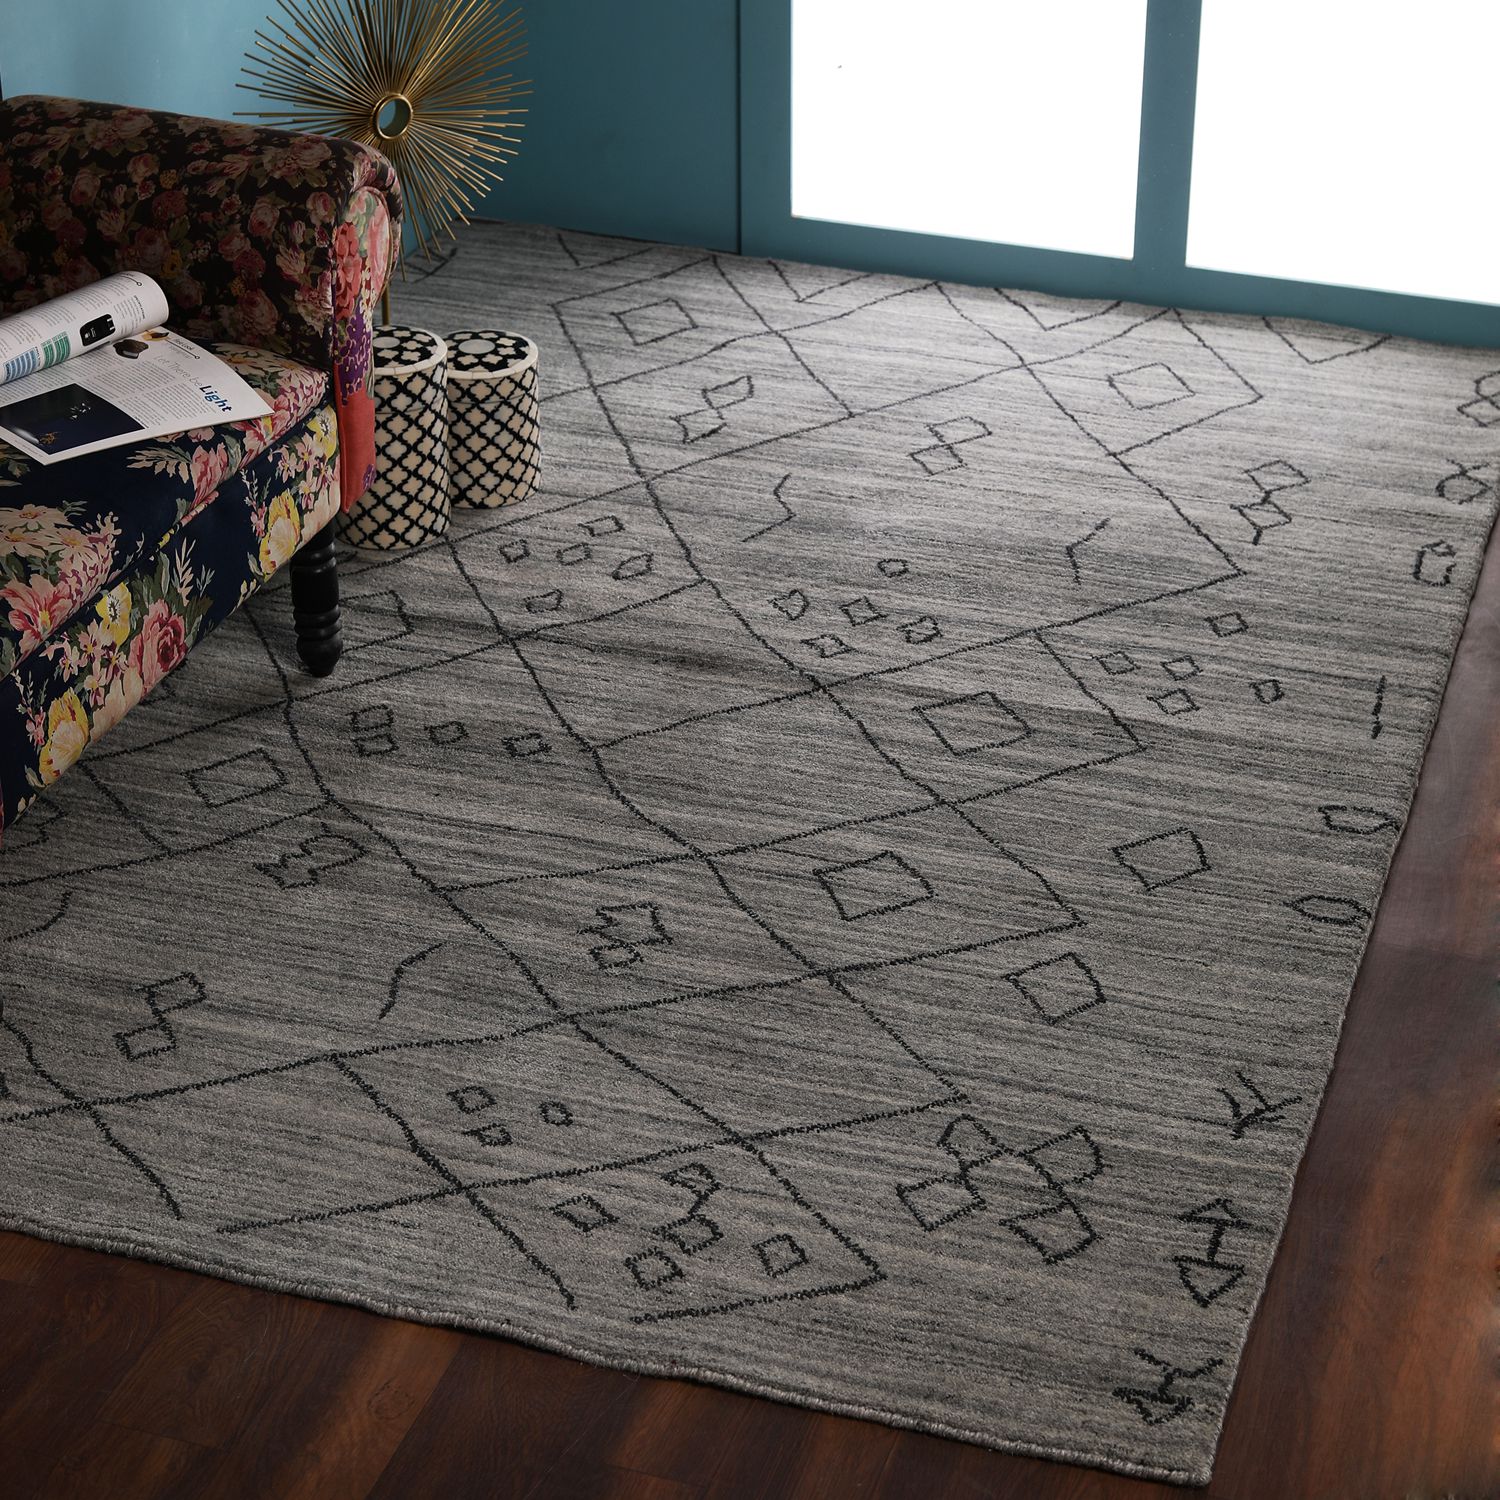     			PEQURA Beige Wool Carpet Abstract 5x8 Ft